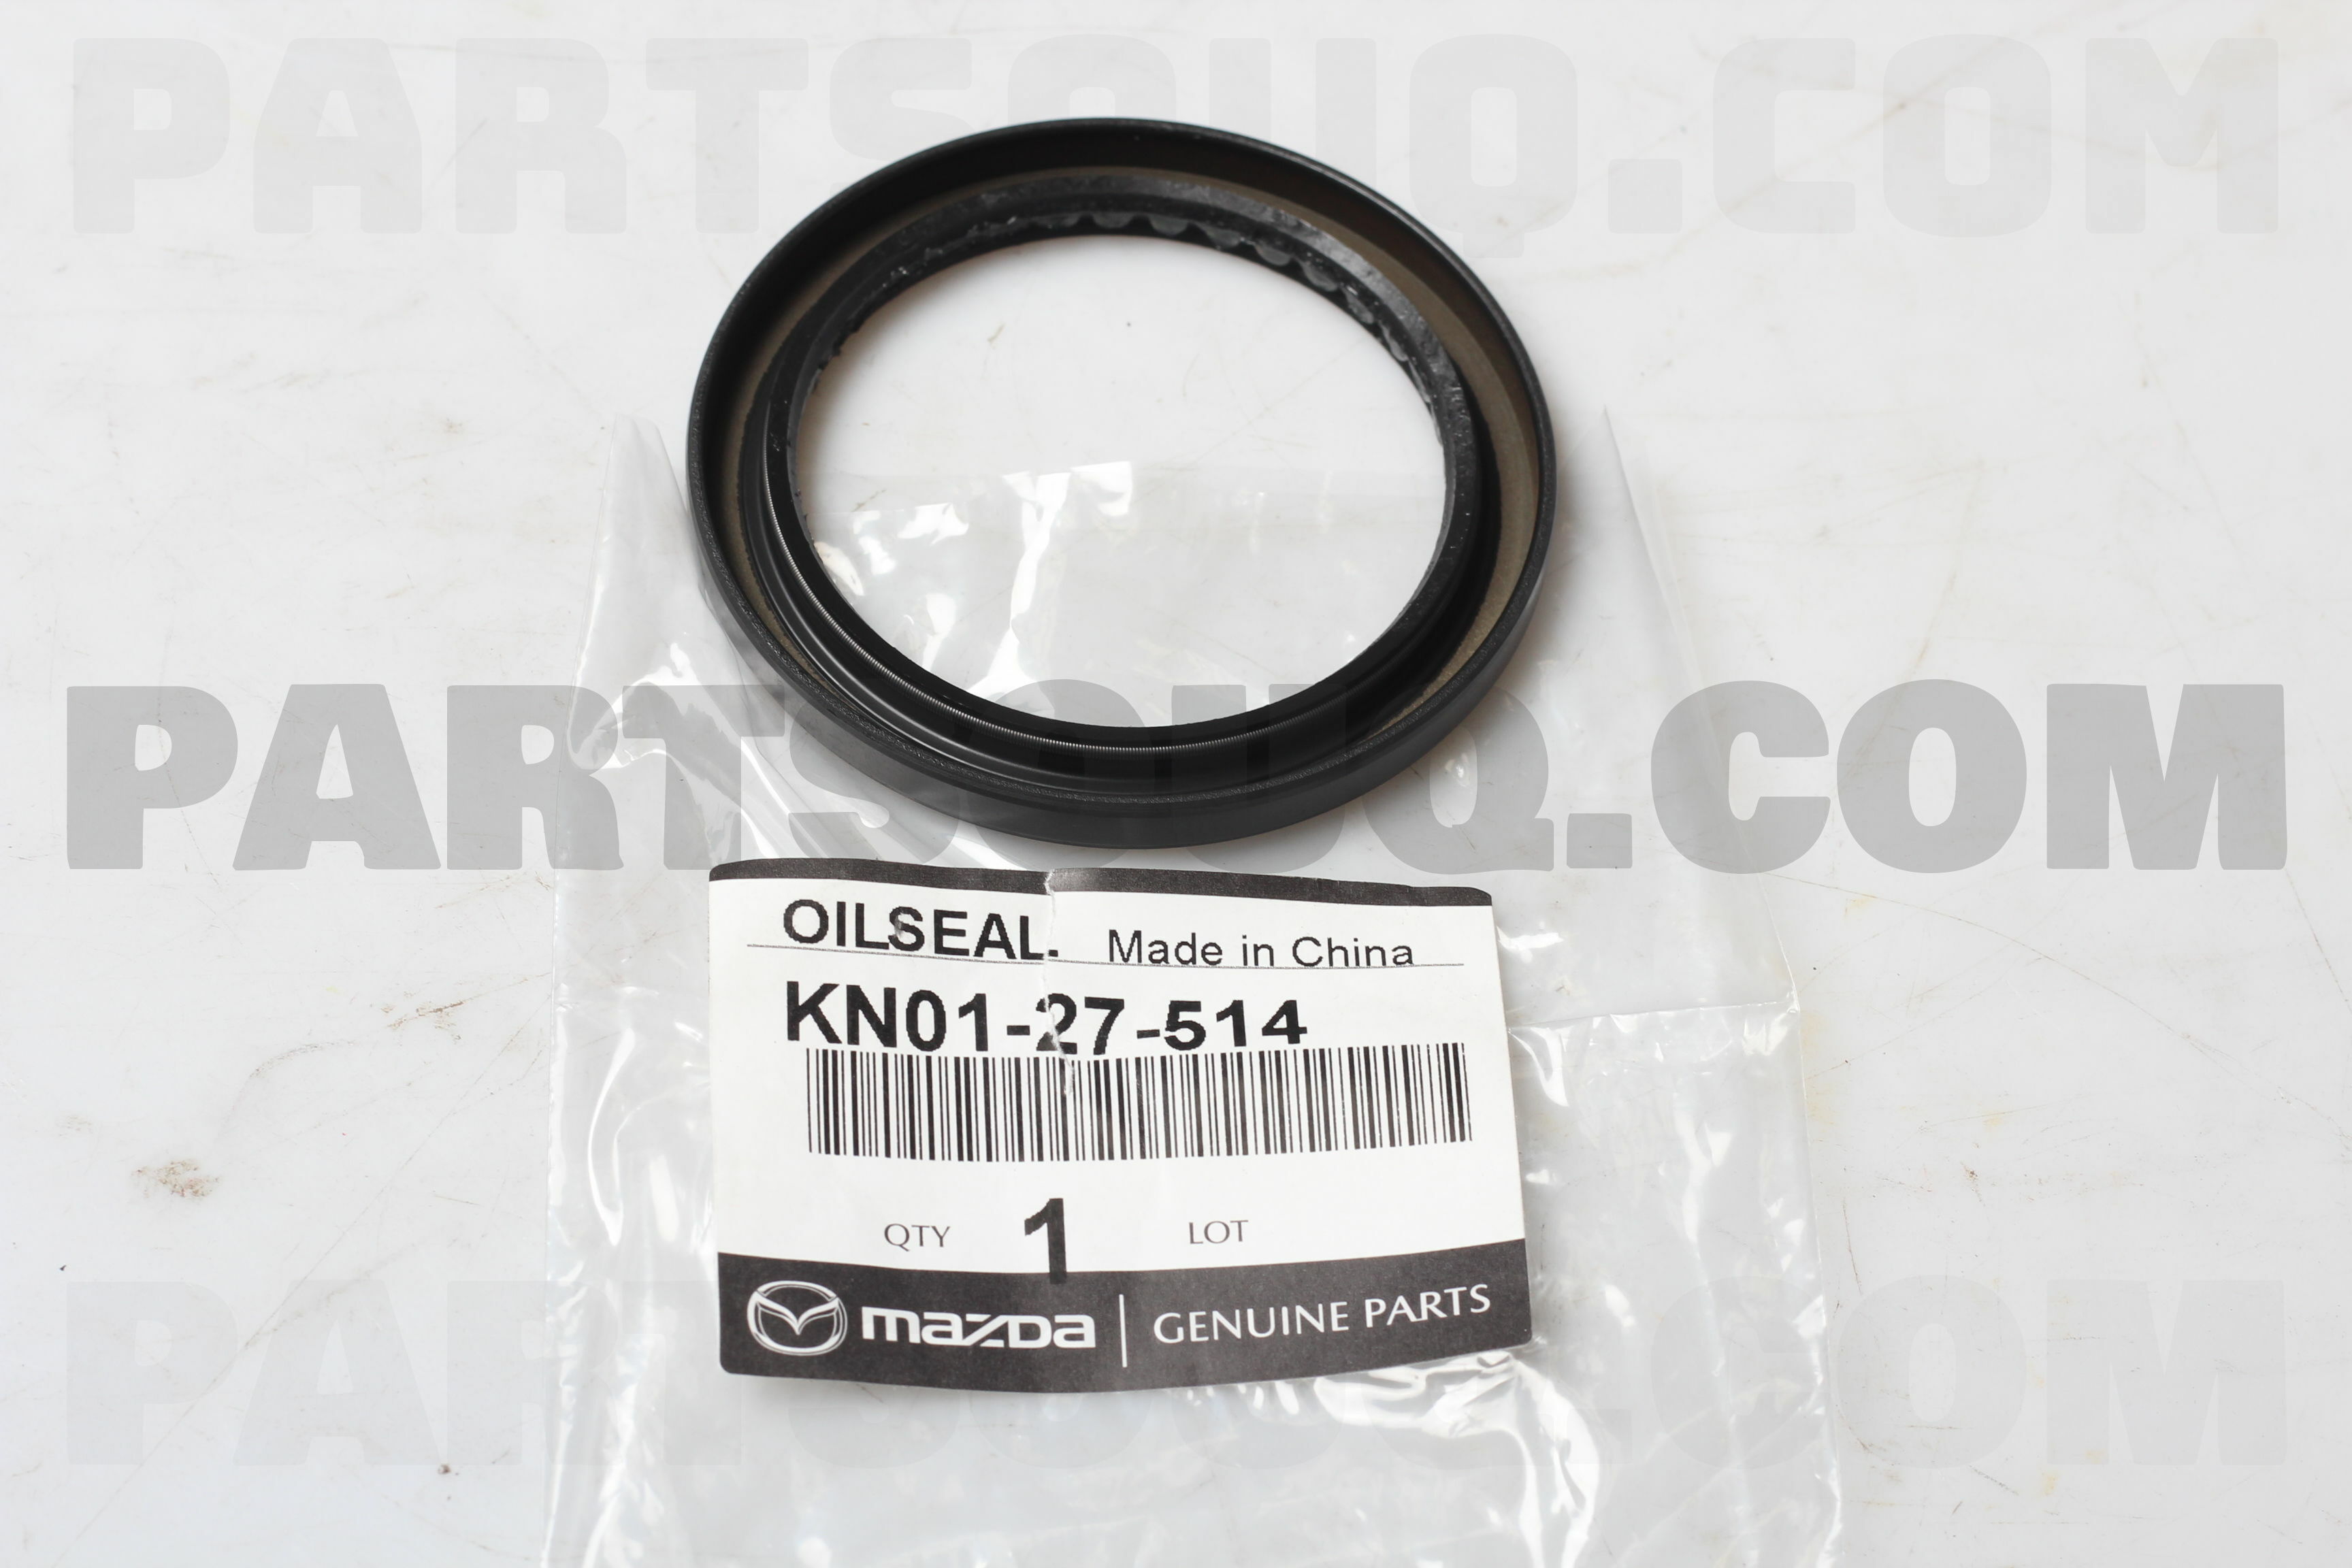 Peugeot XPS XR6 OEM Gear Change Selector Shaft Oil Seal PE753323 Paraolio